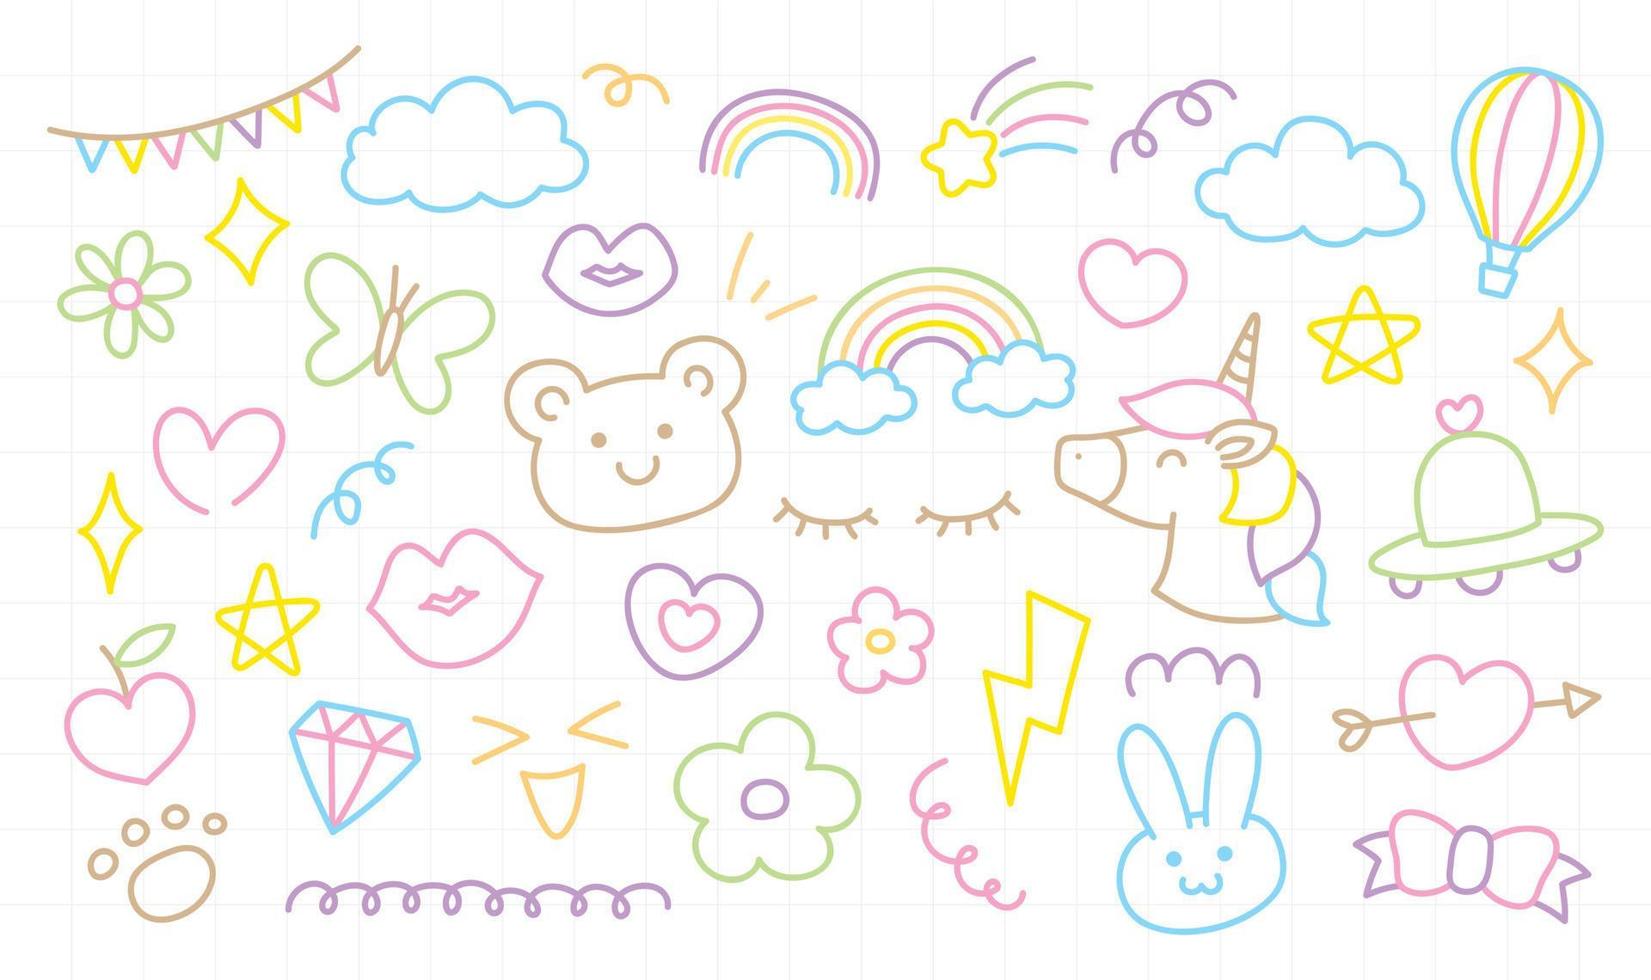 lindo colorido pastel girly dibujado a mano elemento de arte vectorial gráfico en estilo kawaii doodle vector